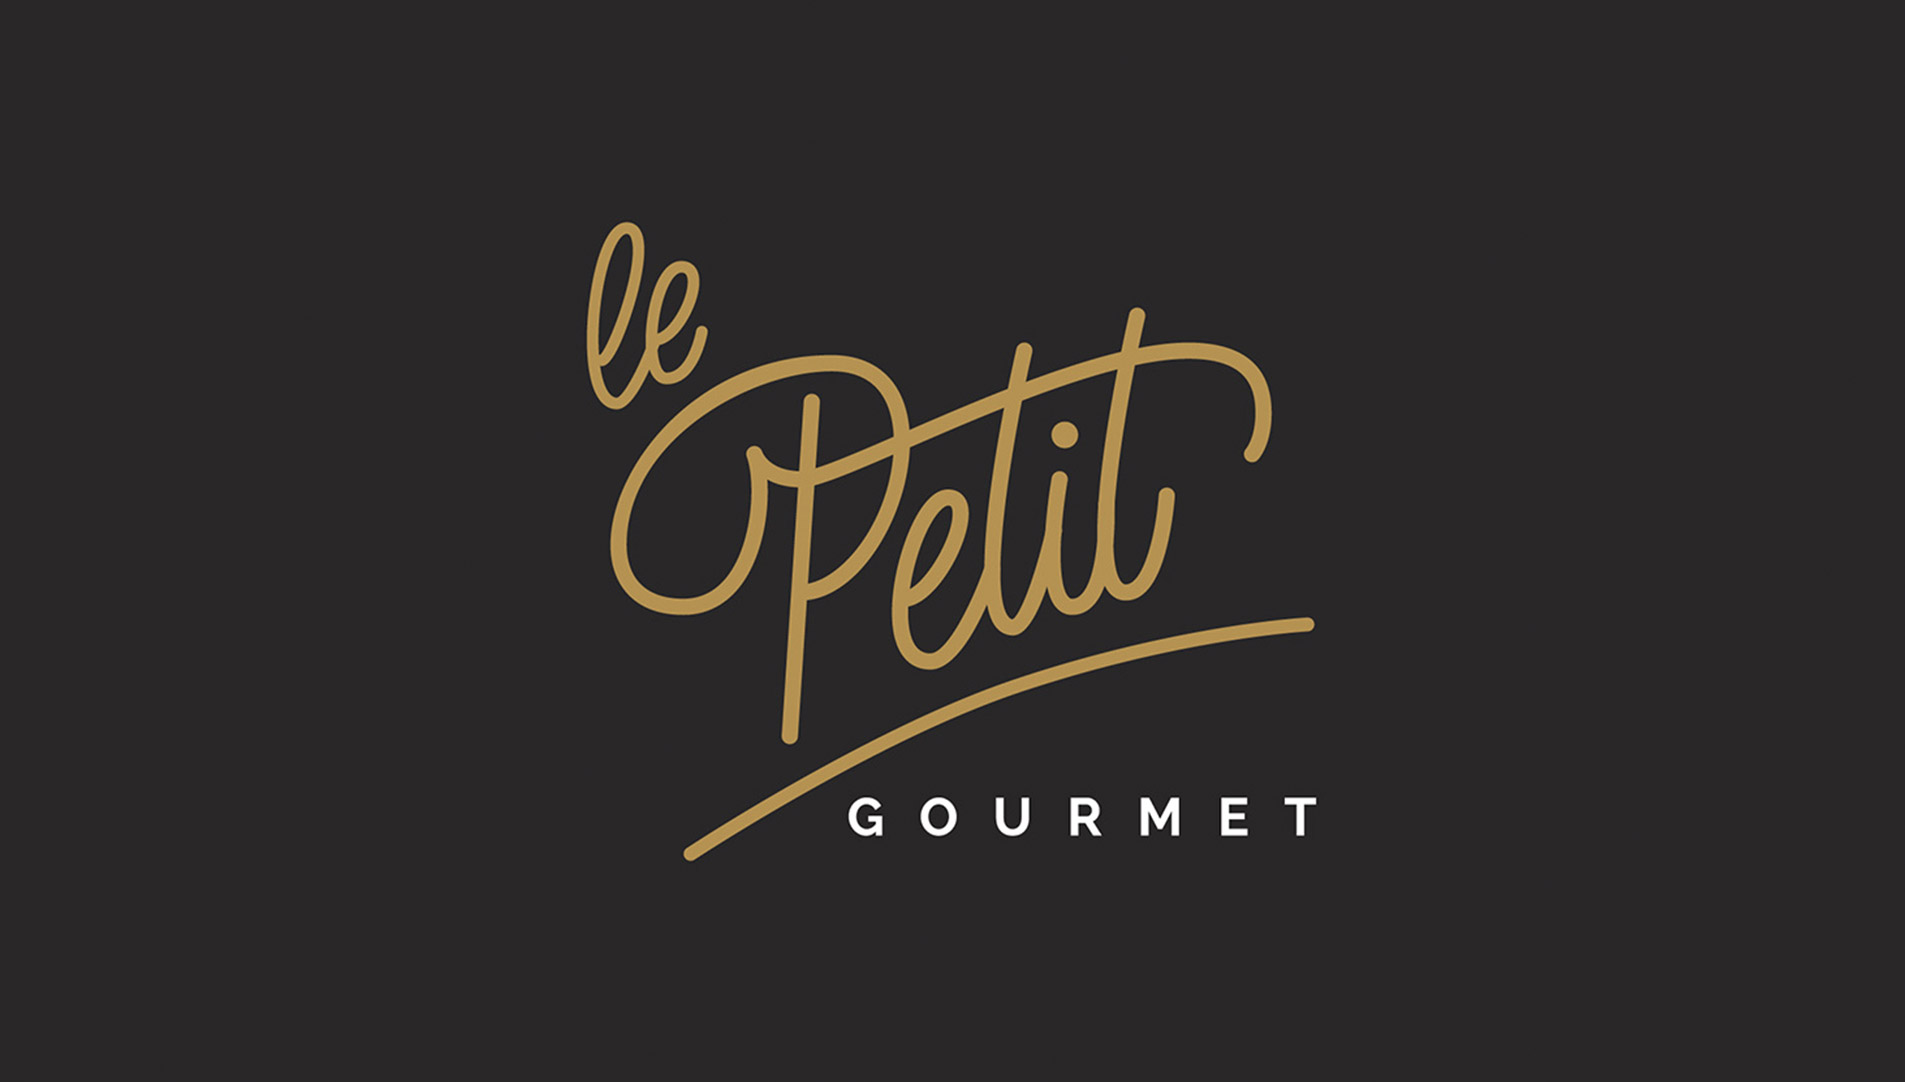 branding agency singapore lepetitgourmet slideshow 01 - Le Petit Gourmet